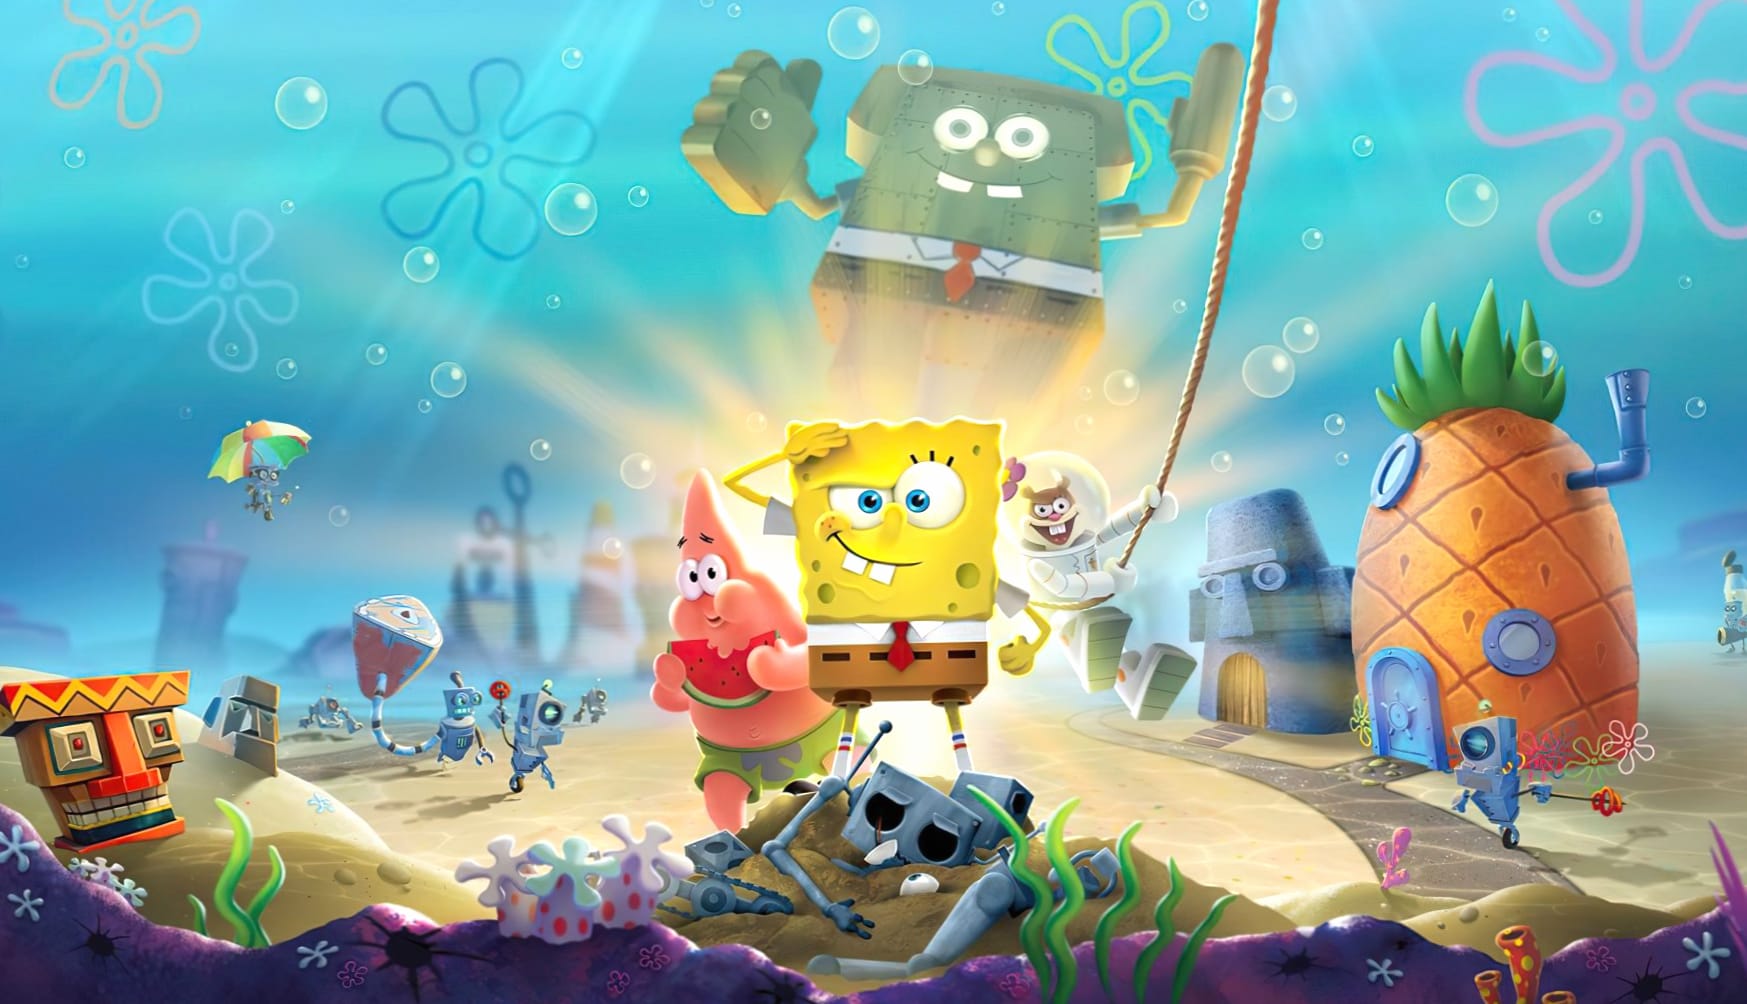 SpongeBob SquarePants Battle for Bikini Bottom at 1024 x 1024 iPad size wallpapers HD quality